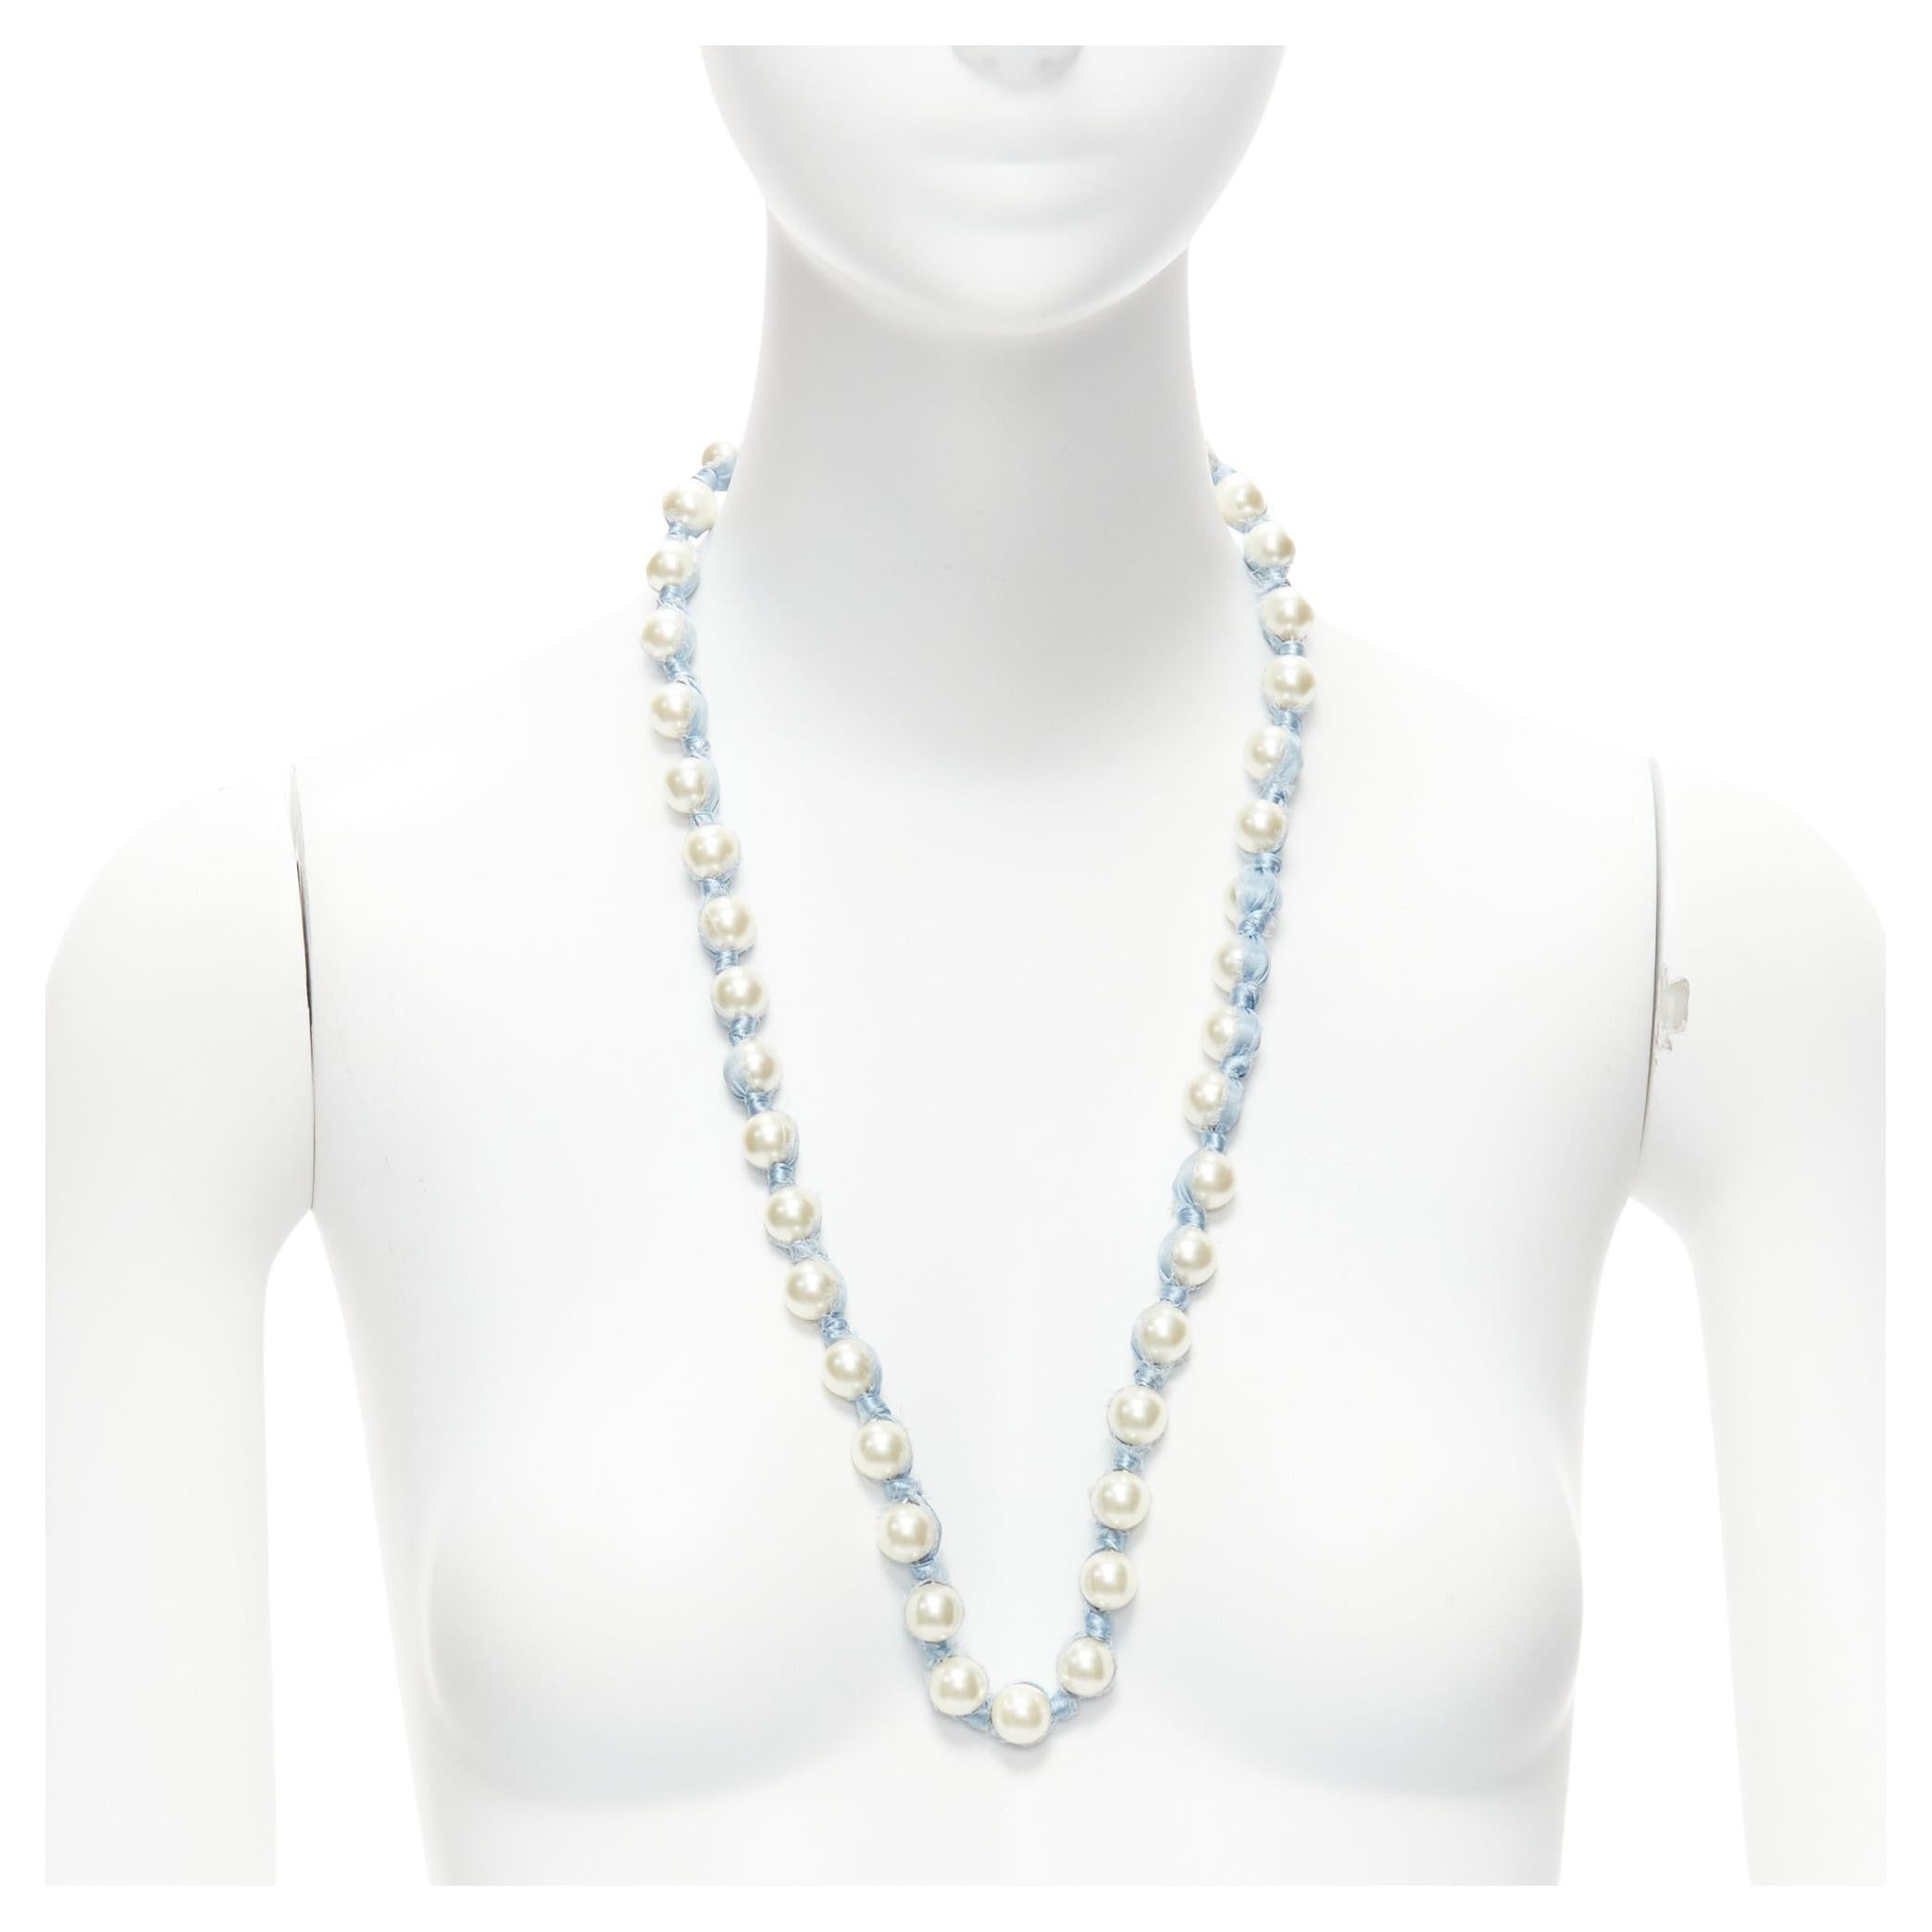 LANVIN ALBER ELBAZ, long collier enveloppant un ruban de soie bleu perle crème en vente